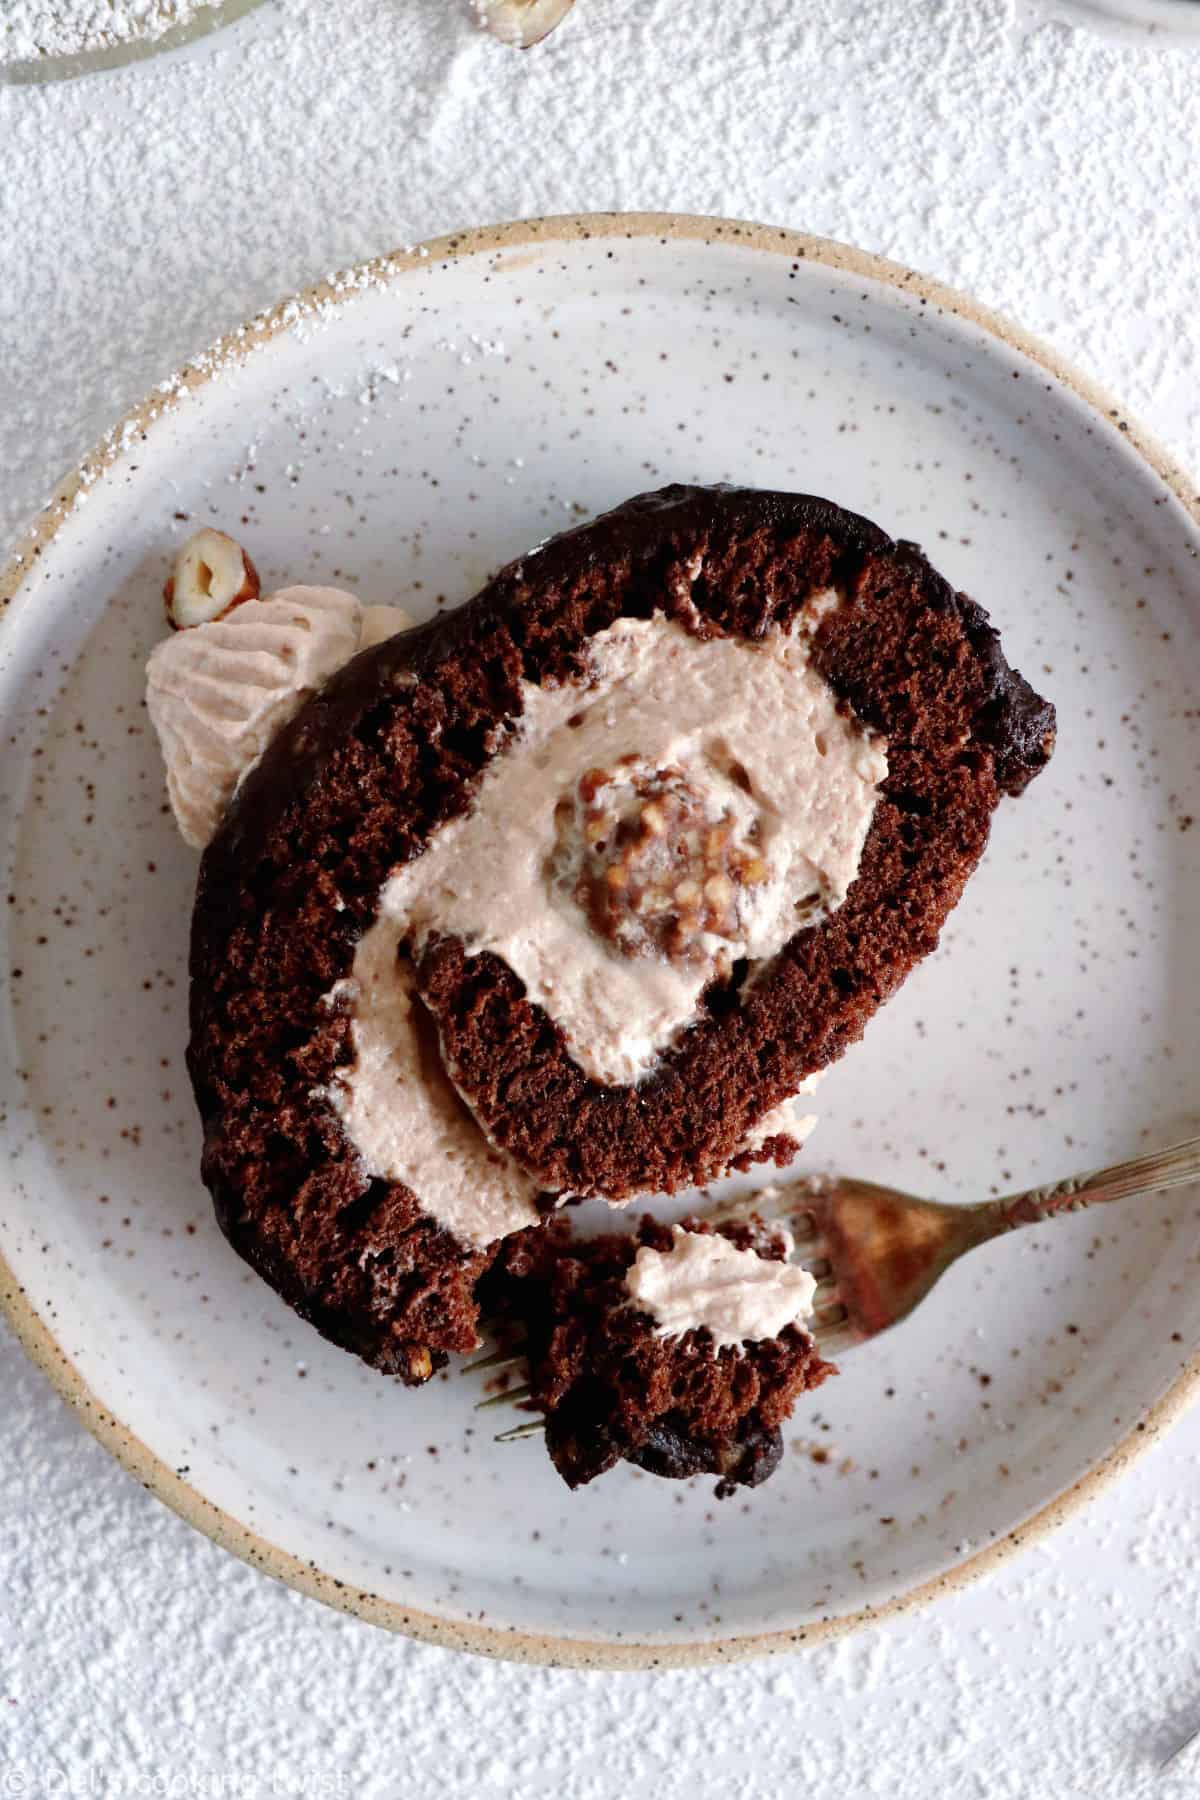 Ferrero Rocher Cake Roll consists in a chocolate sponge cake, a creamy chocolate-hazelnut mascarpone filling hiding some whole Ferrero Rochers, and a crispy Rocher chocolate coating on top.